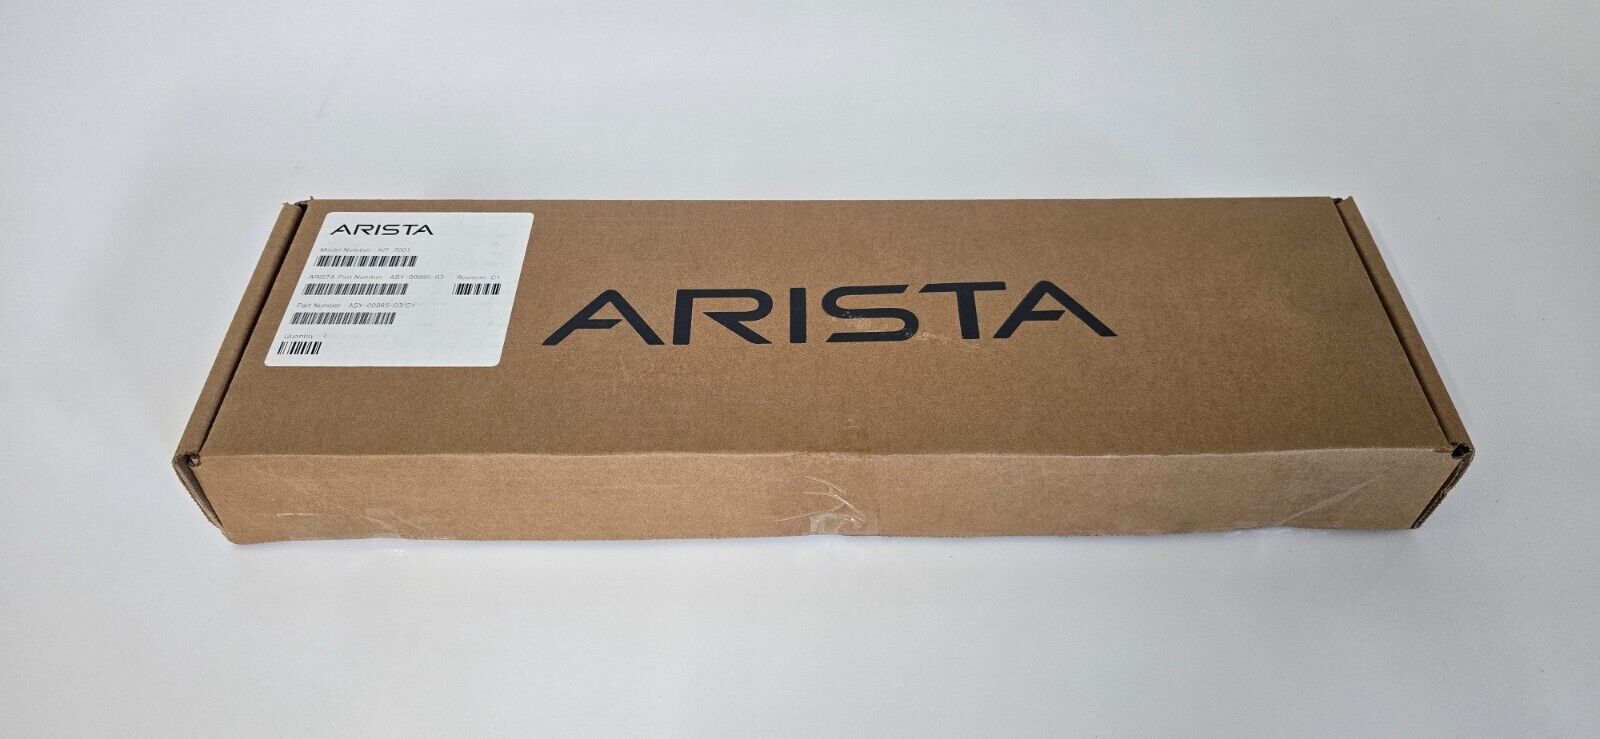 Arista KIT-7001 Full Accessory Kit for Arista 1RU Switch Toolless Rack Rail